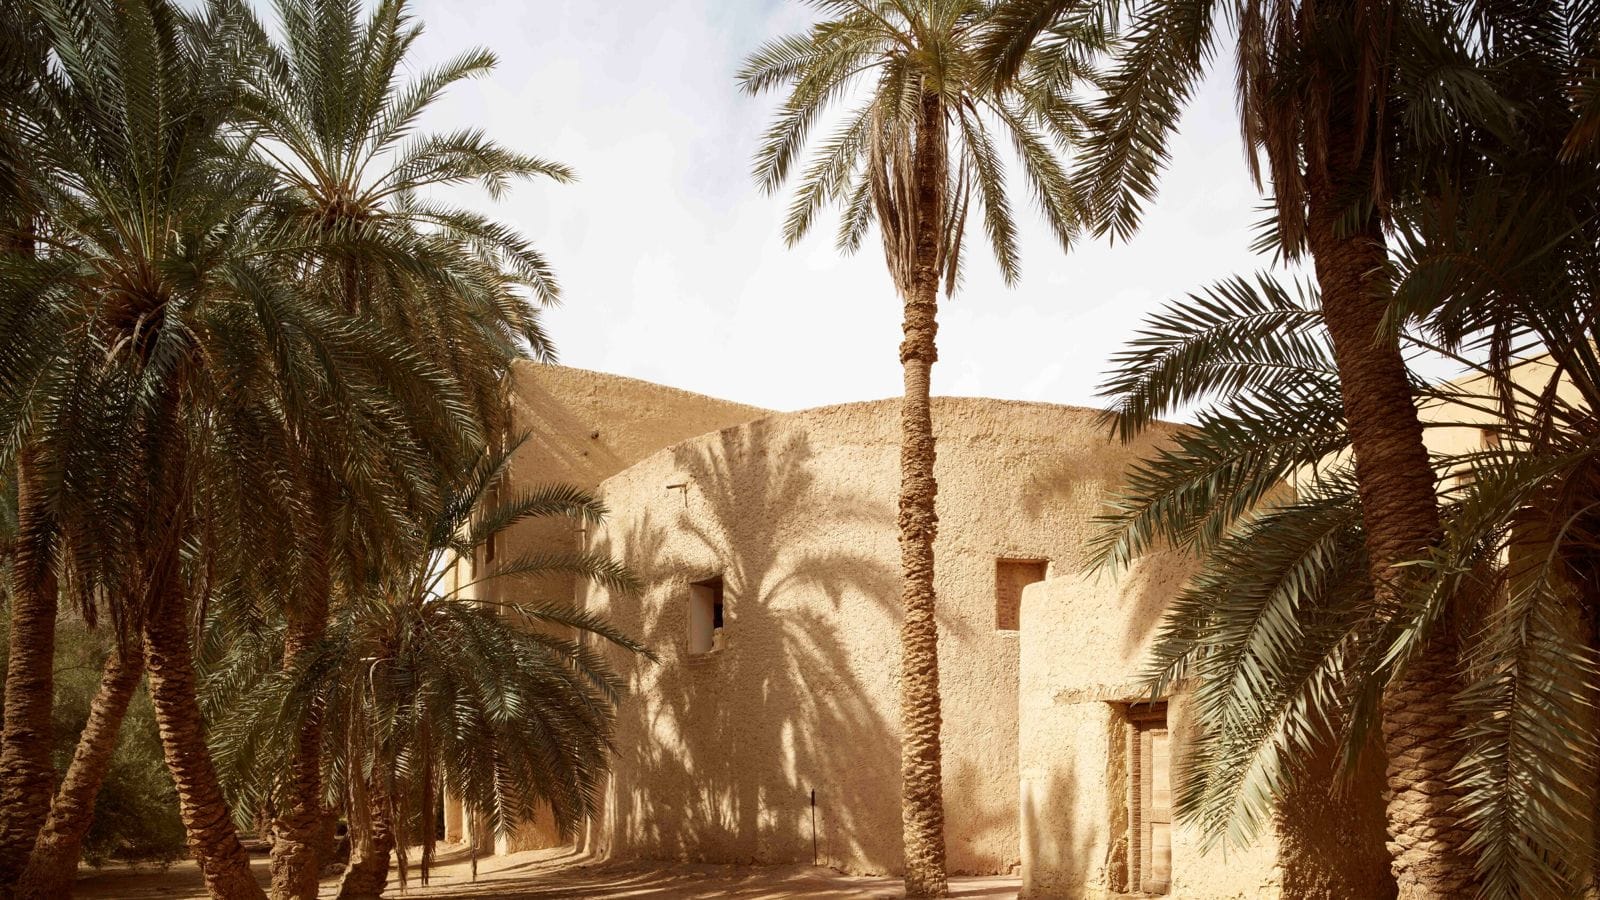 Siwa Oasis: A travel guide to Egypt's hidden desert gem